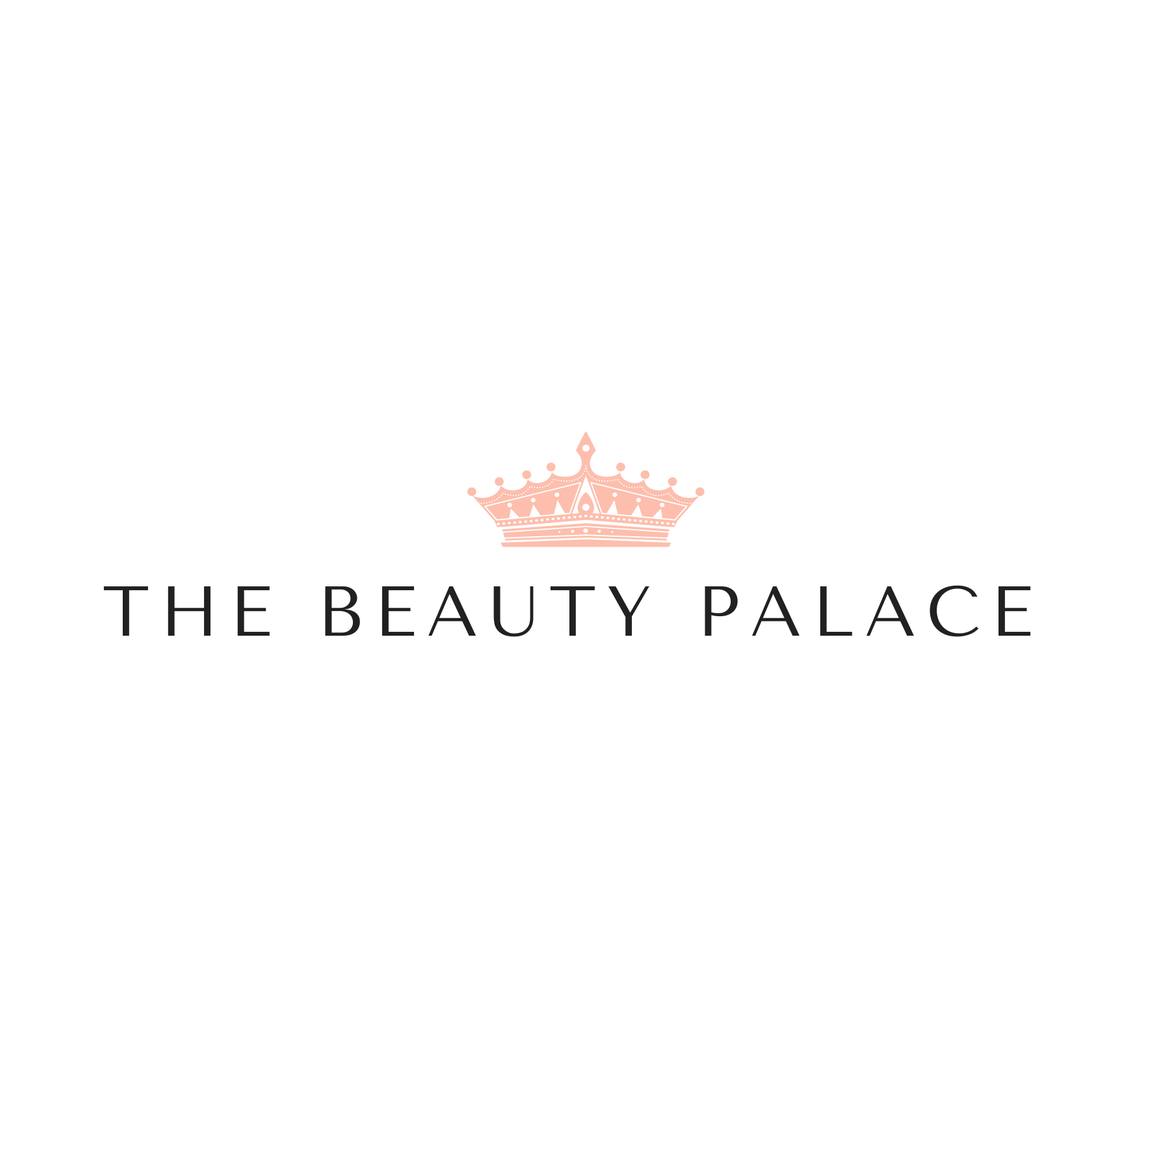 The Beauty Palace